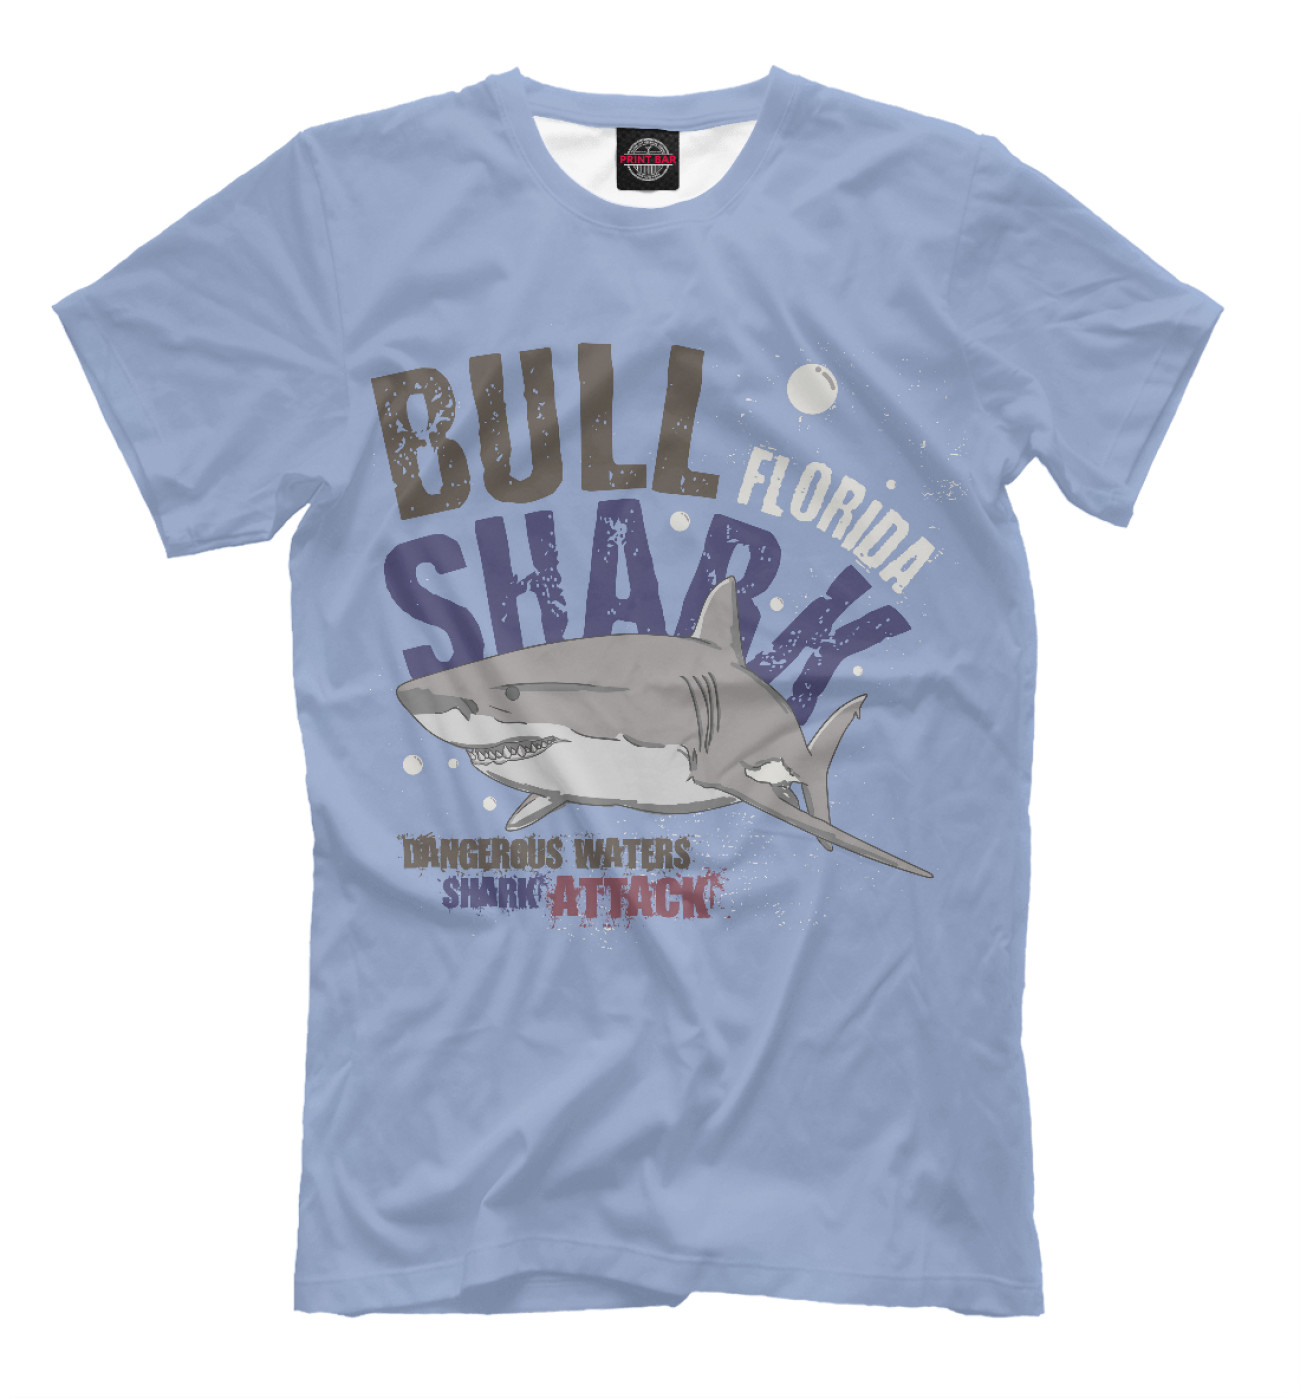 Мужская Футболка Bull Shark, артикул: AKL-797638-fut-2